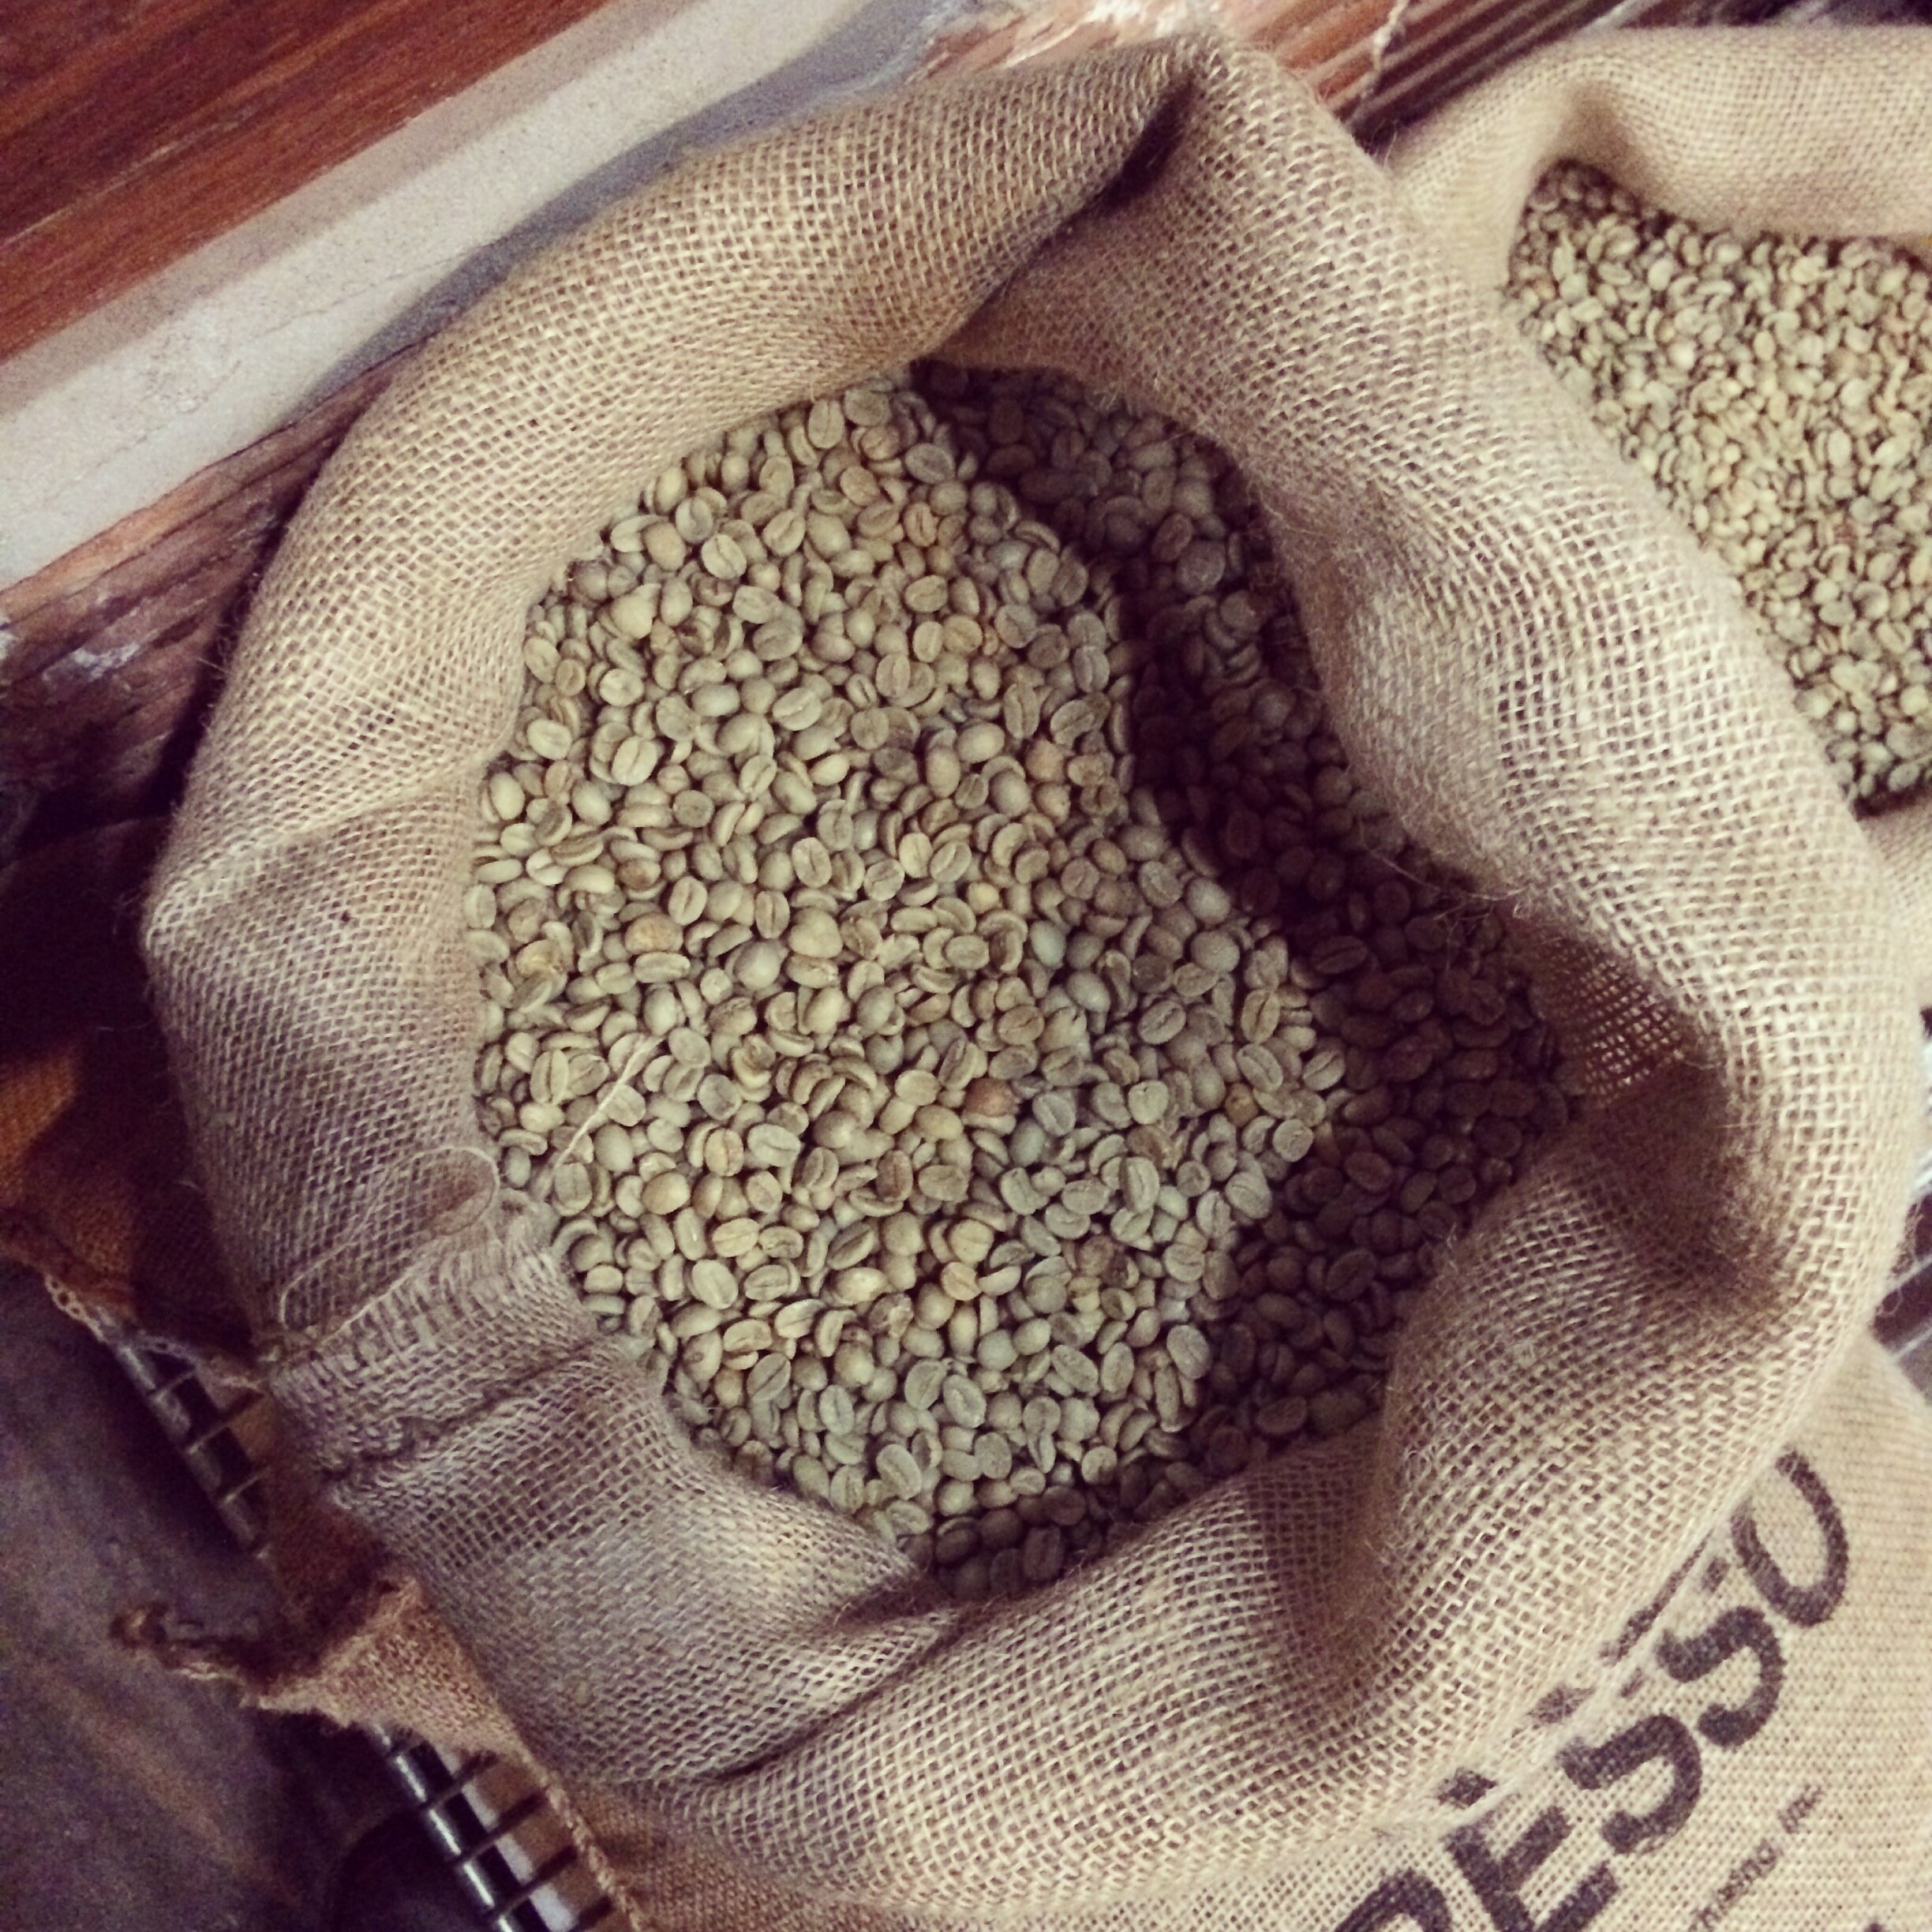 green coffee beans.JPG